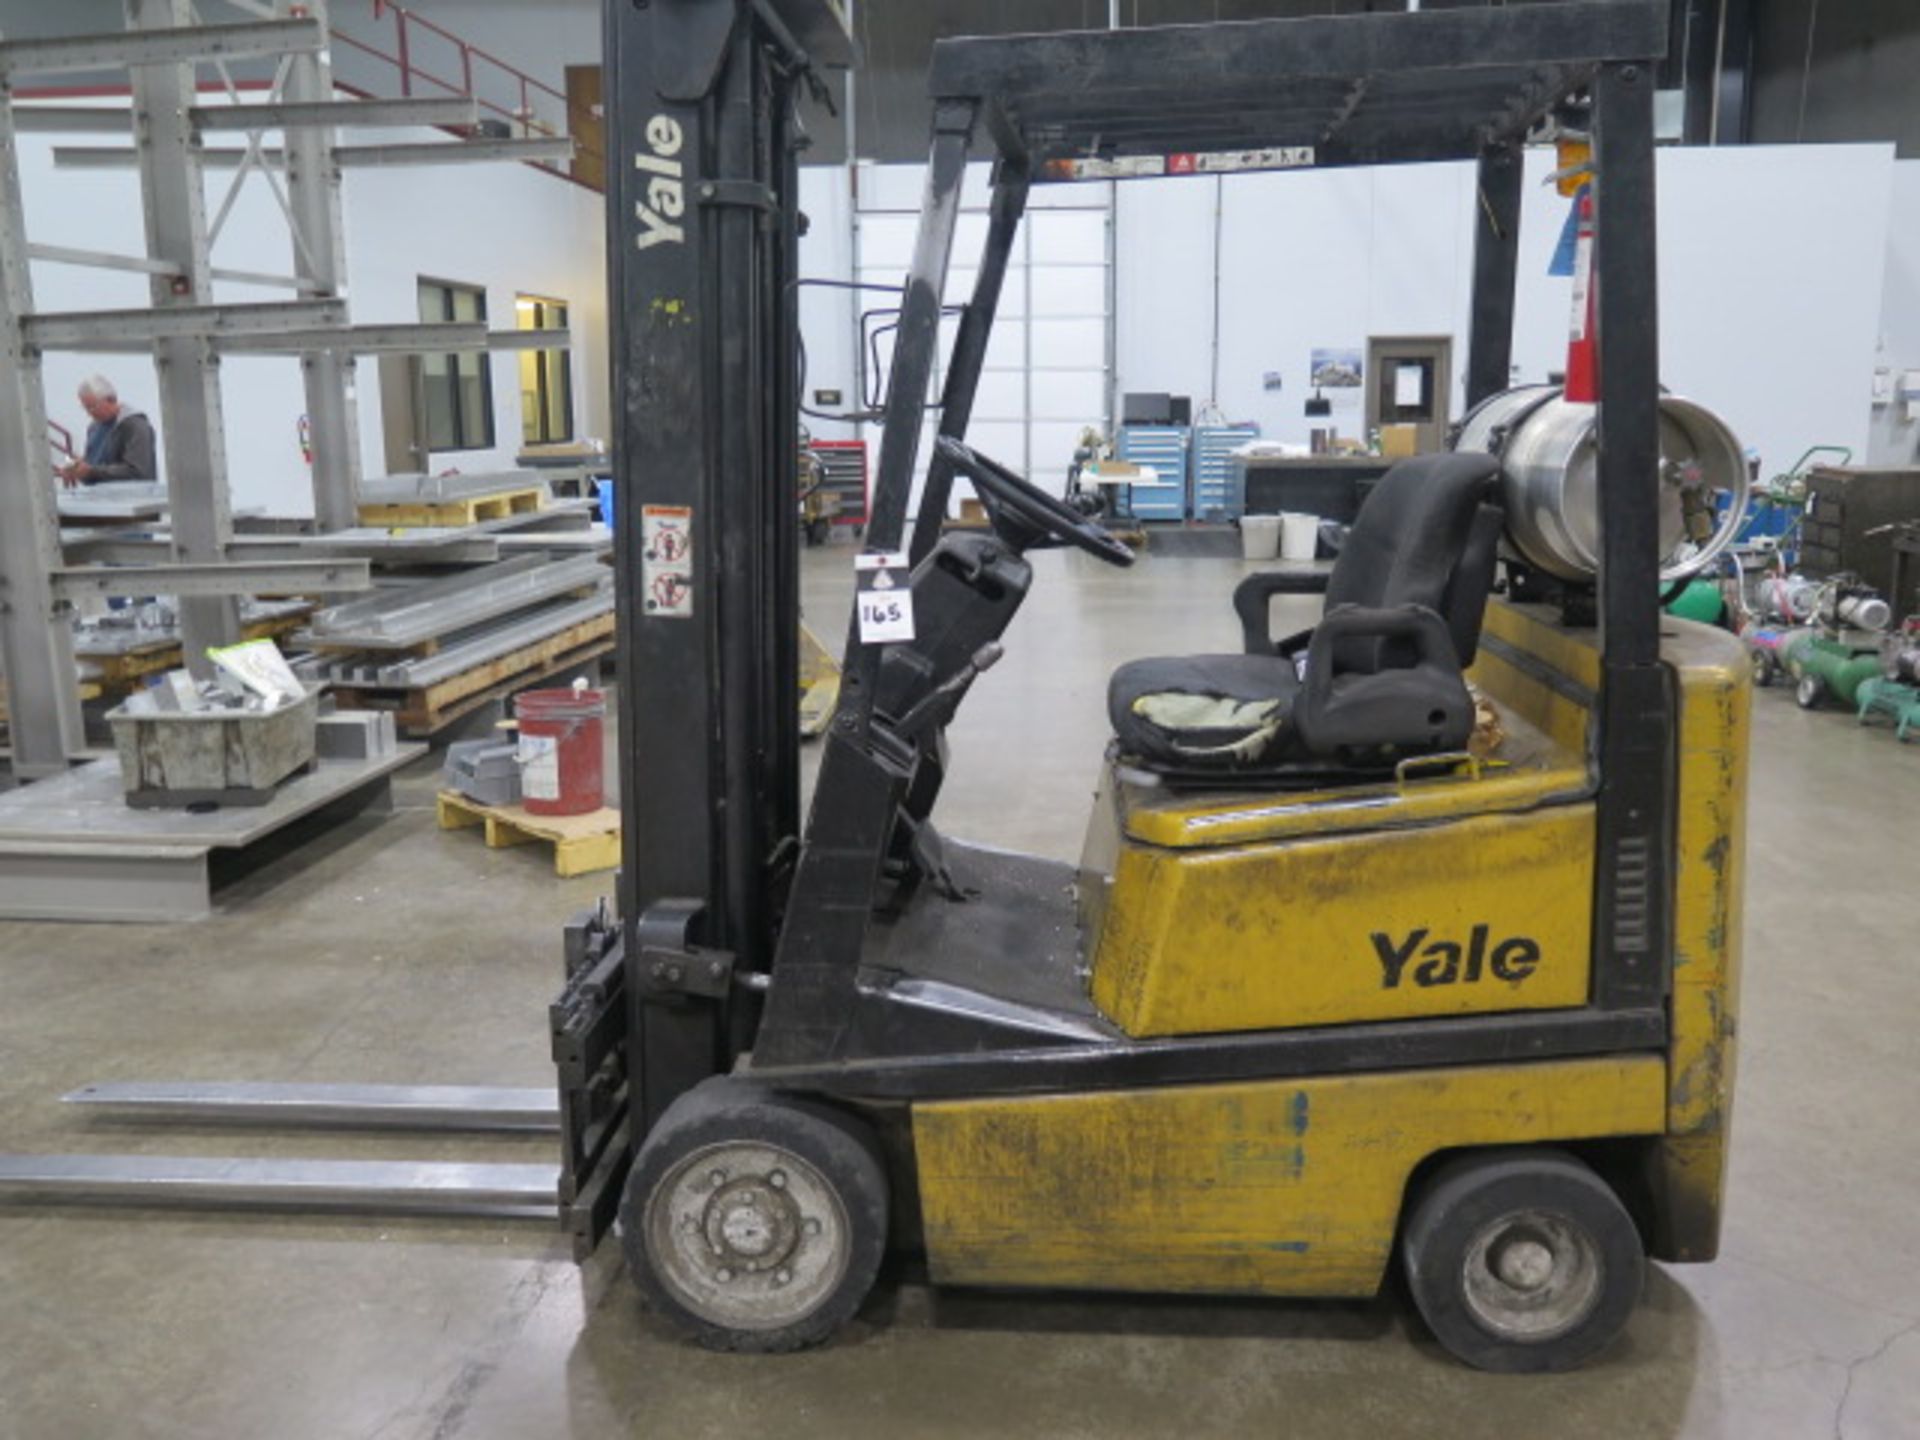 Yale GLC030CENUAE083 3000 Lb LPG Forklift s/n N542835 w/ 3-Stage Mast, 190” Lift Height, SOLD AS IS